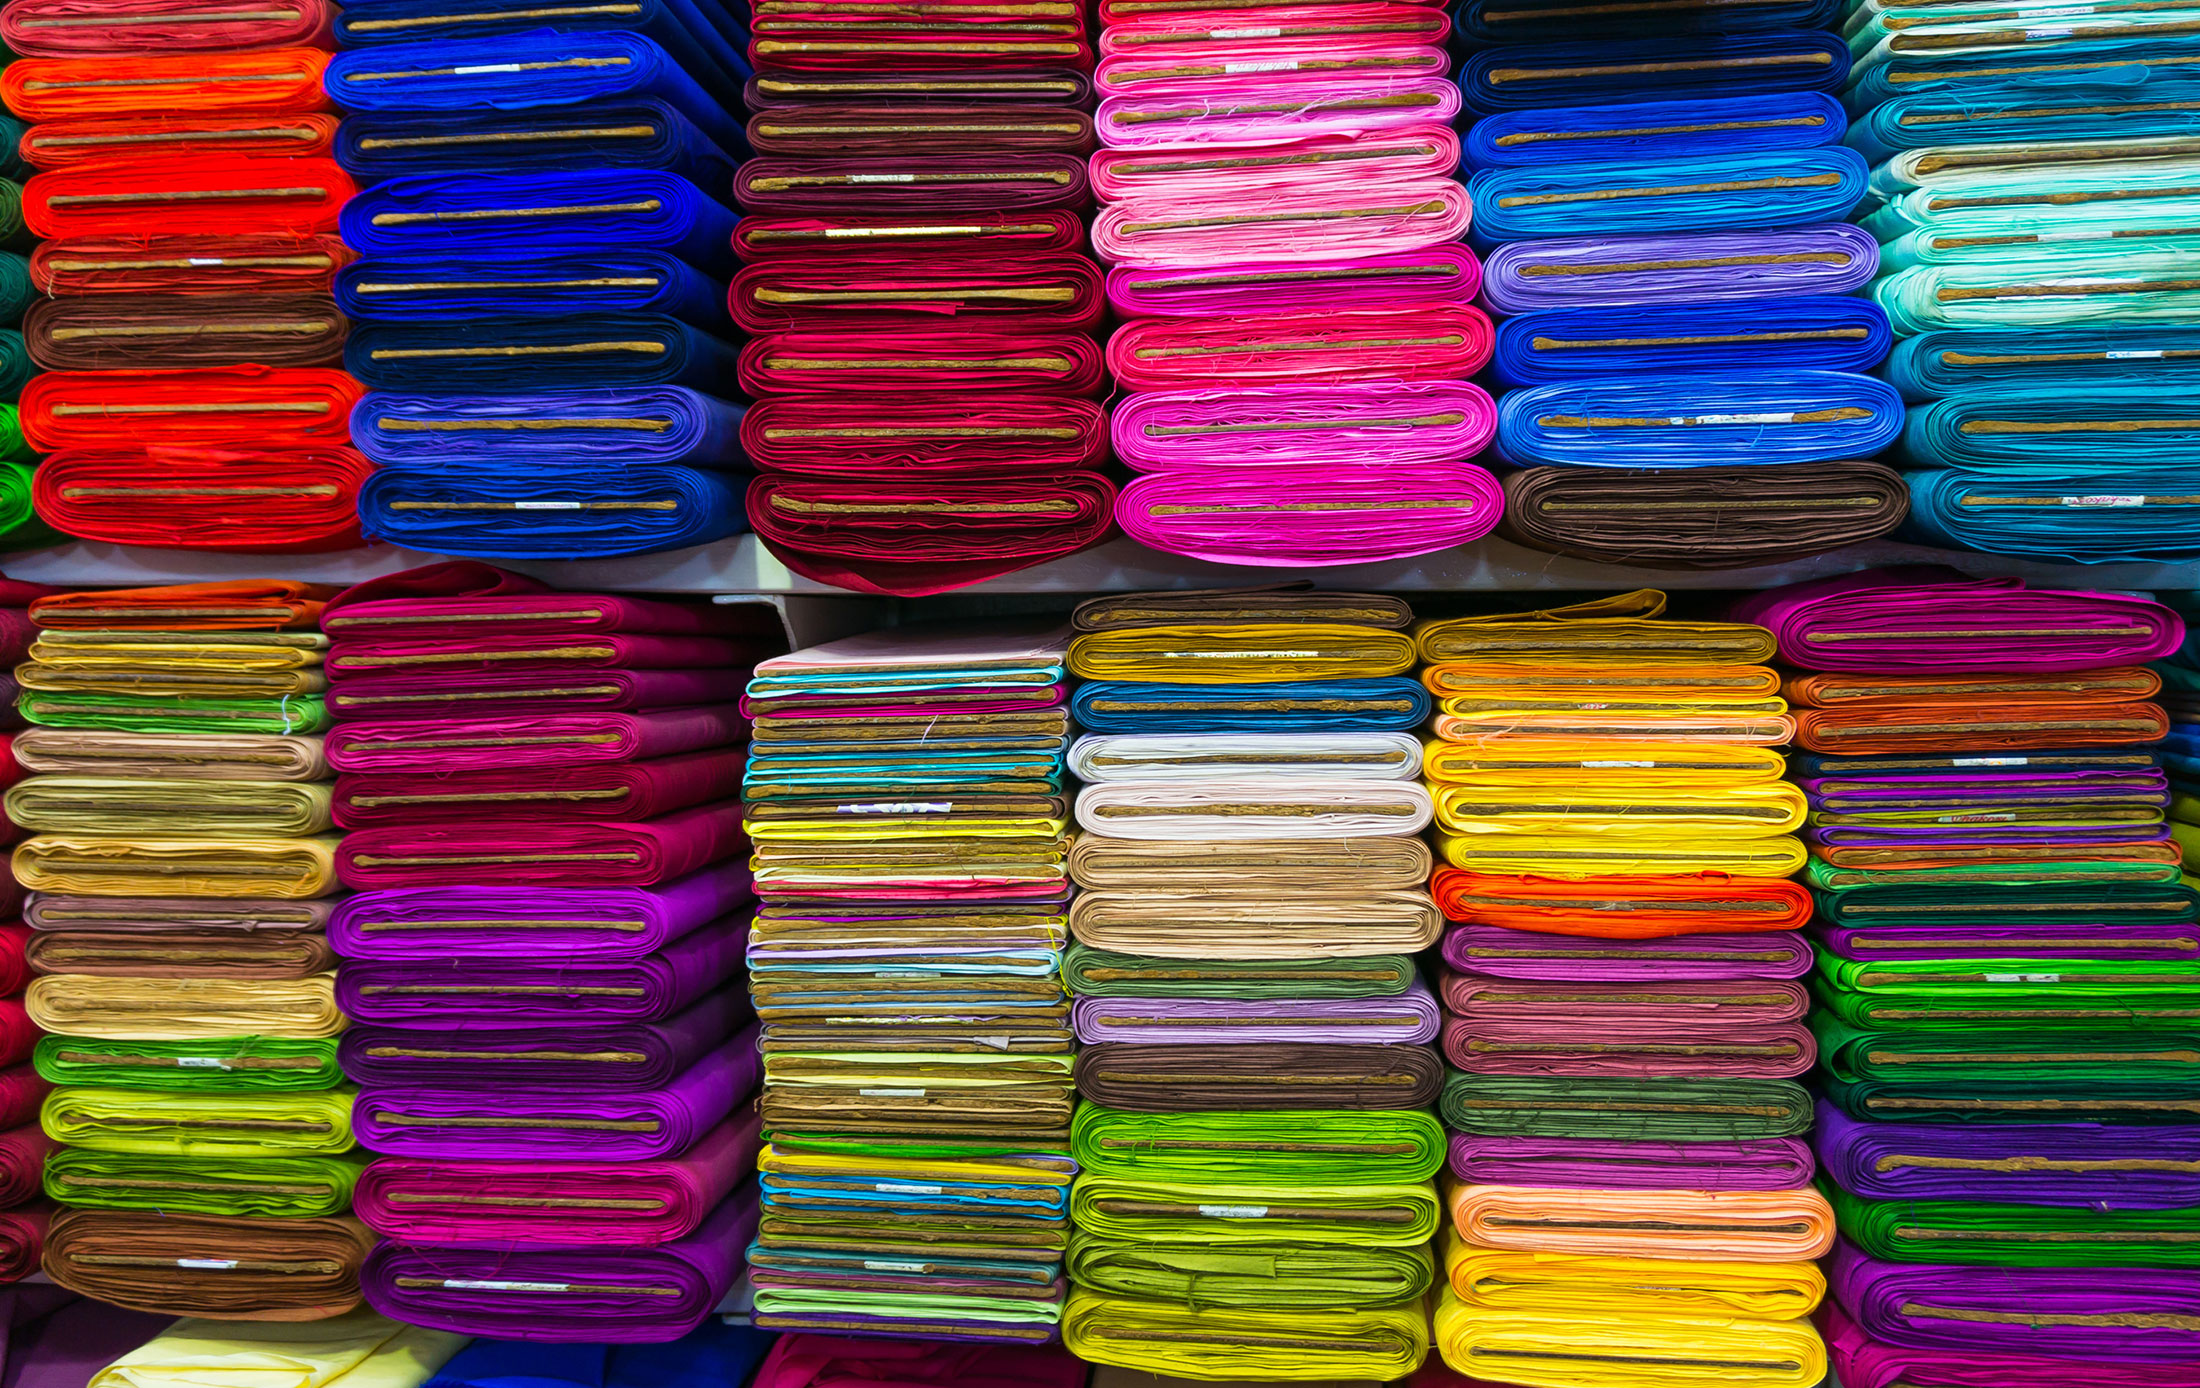 Rolls of fabric in Bangladesh